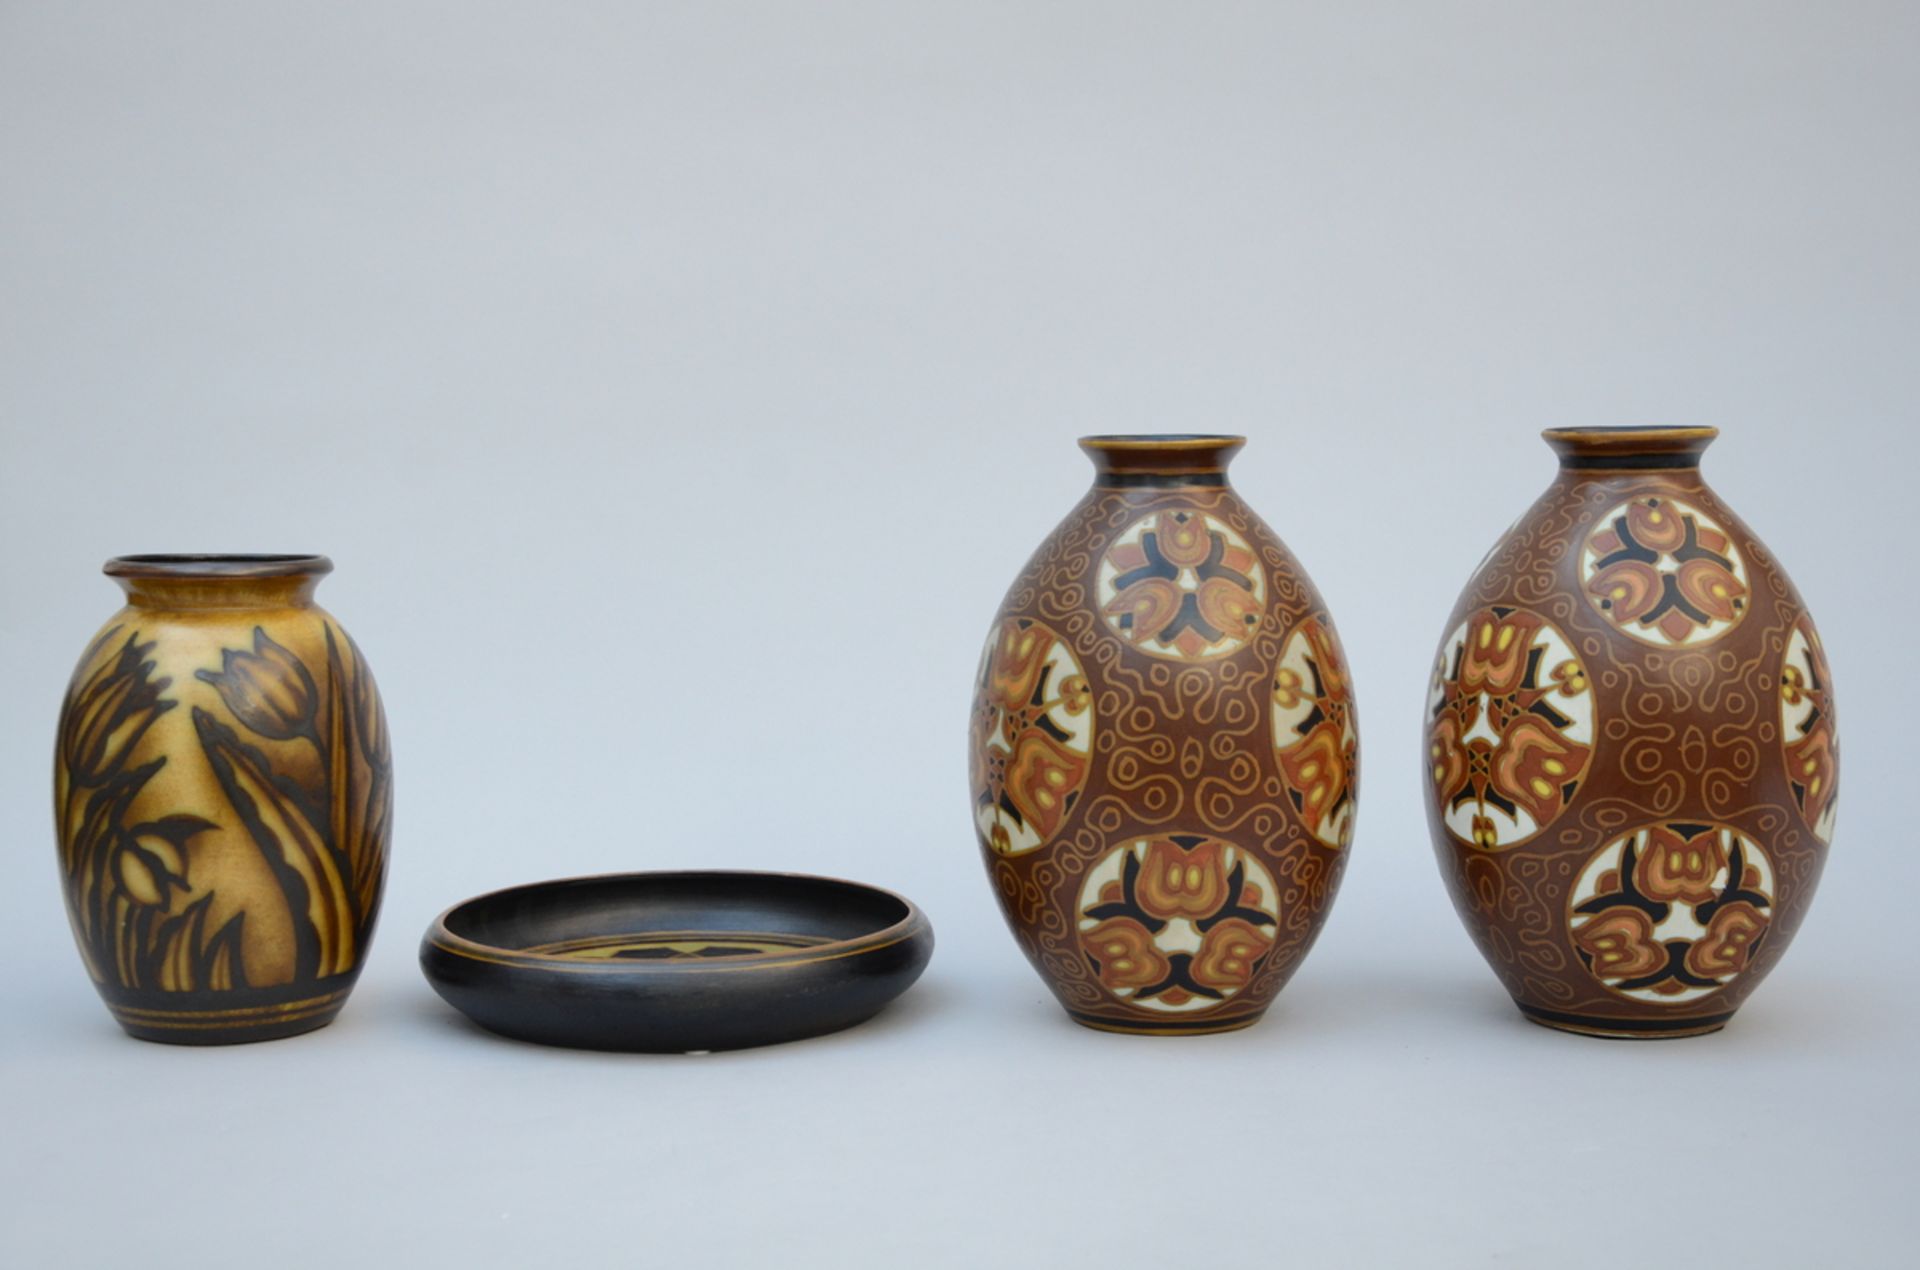 3 vases + bowl by Boch Keramis D2524 D977 D1093 (dia 27) (h25 to 31cm) - Image 2 of 3